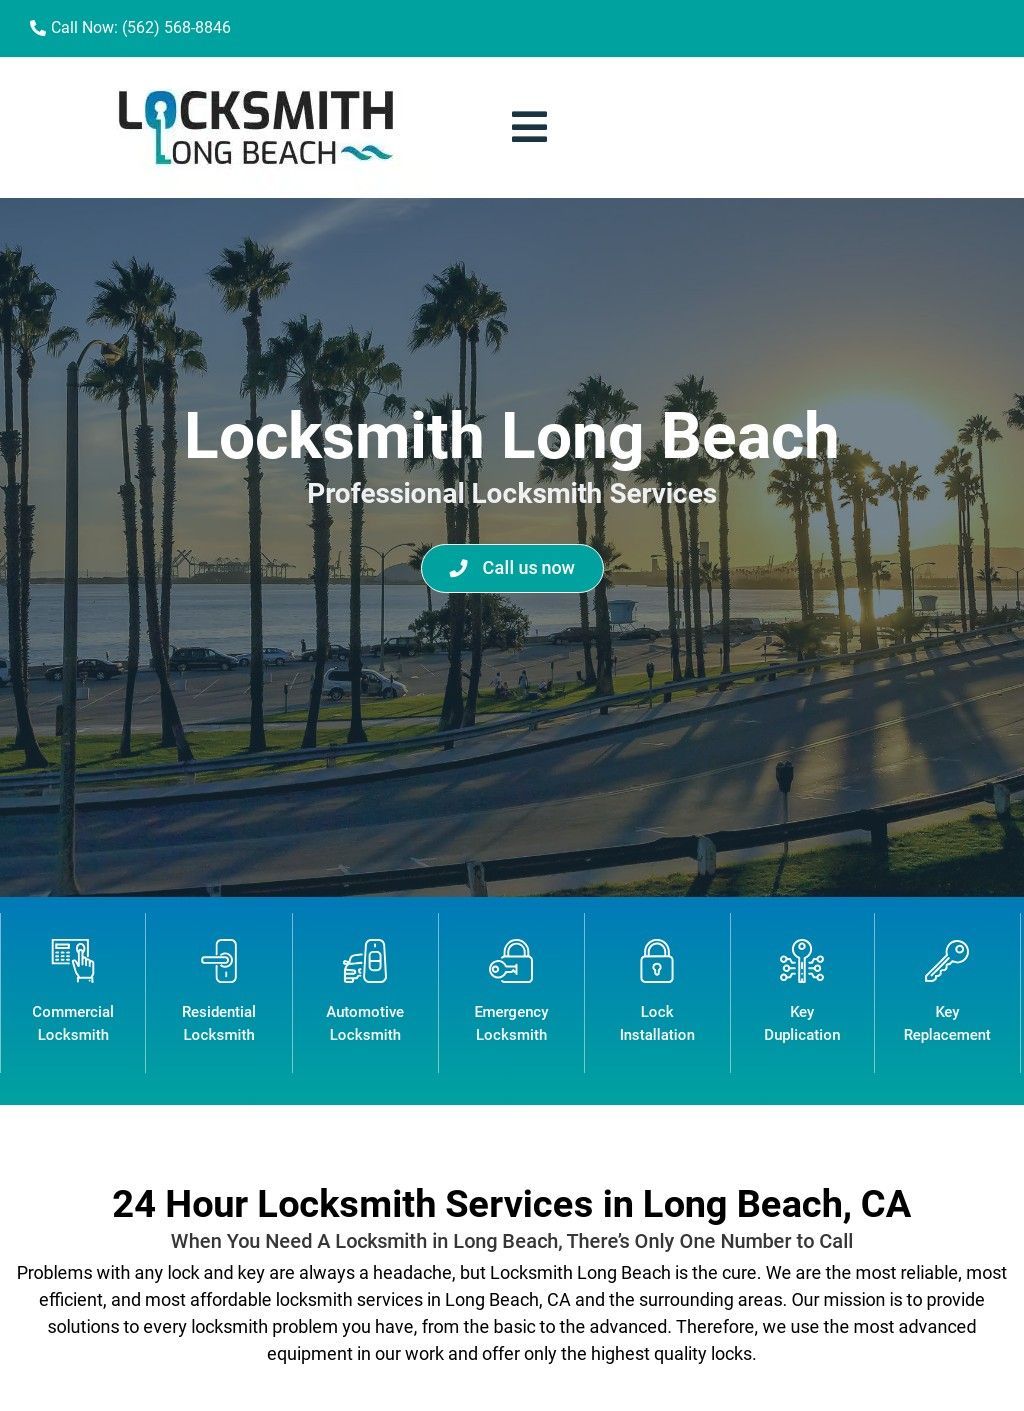 Locksmith Long beach